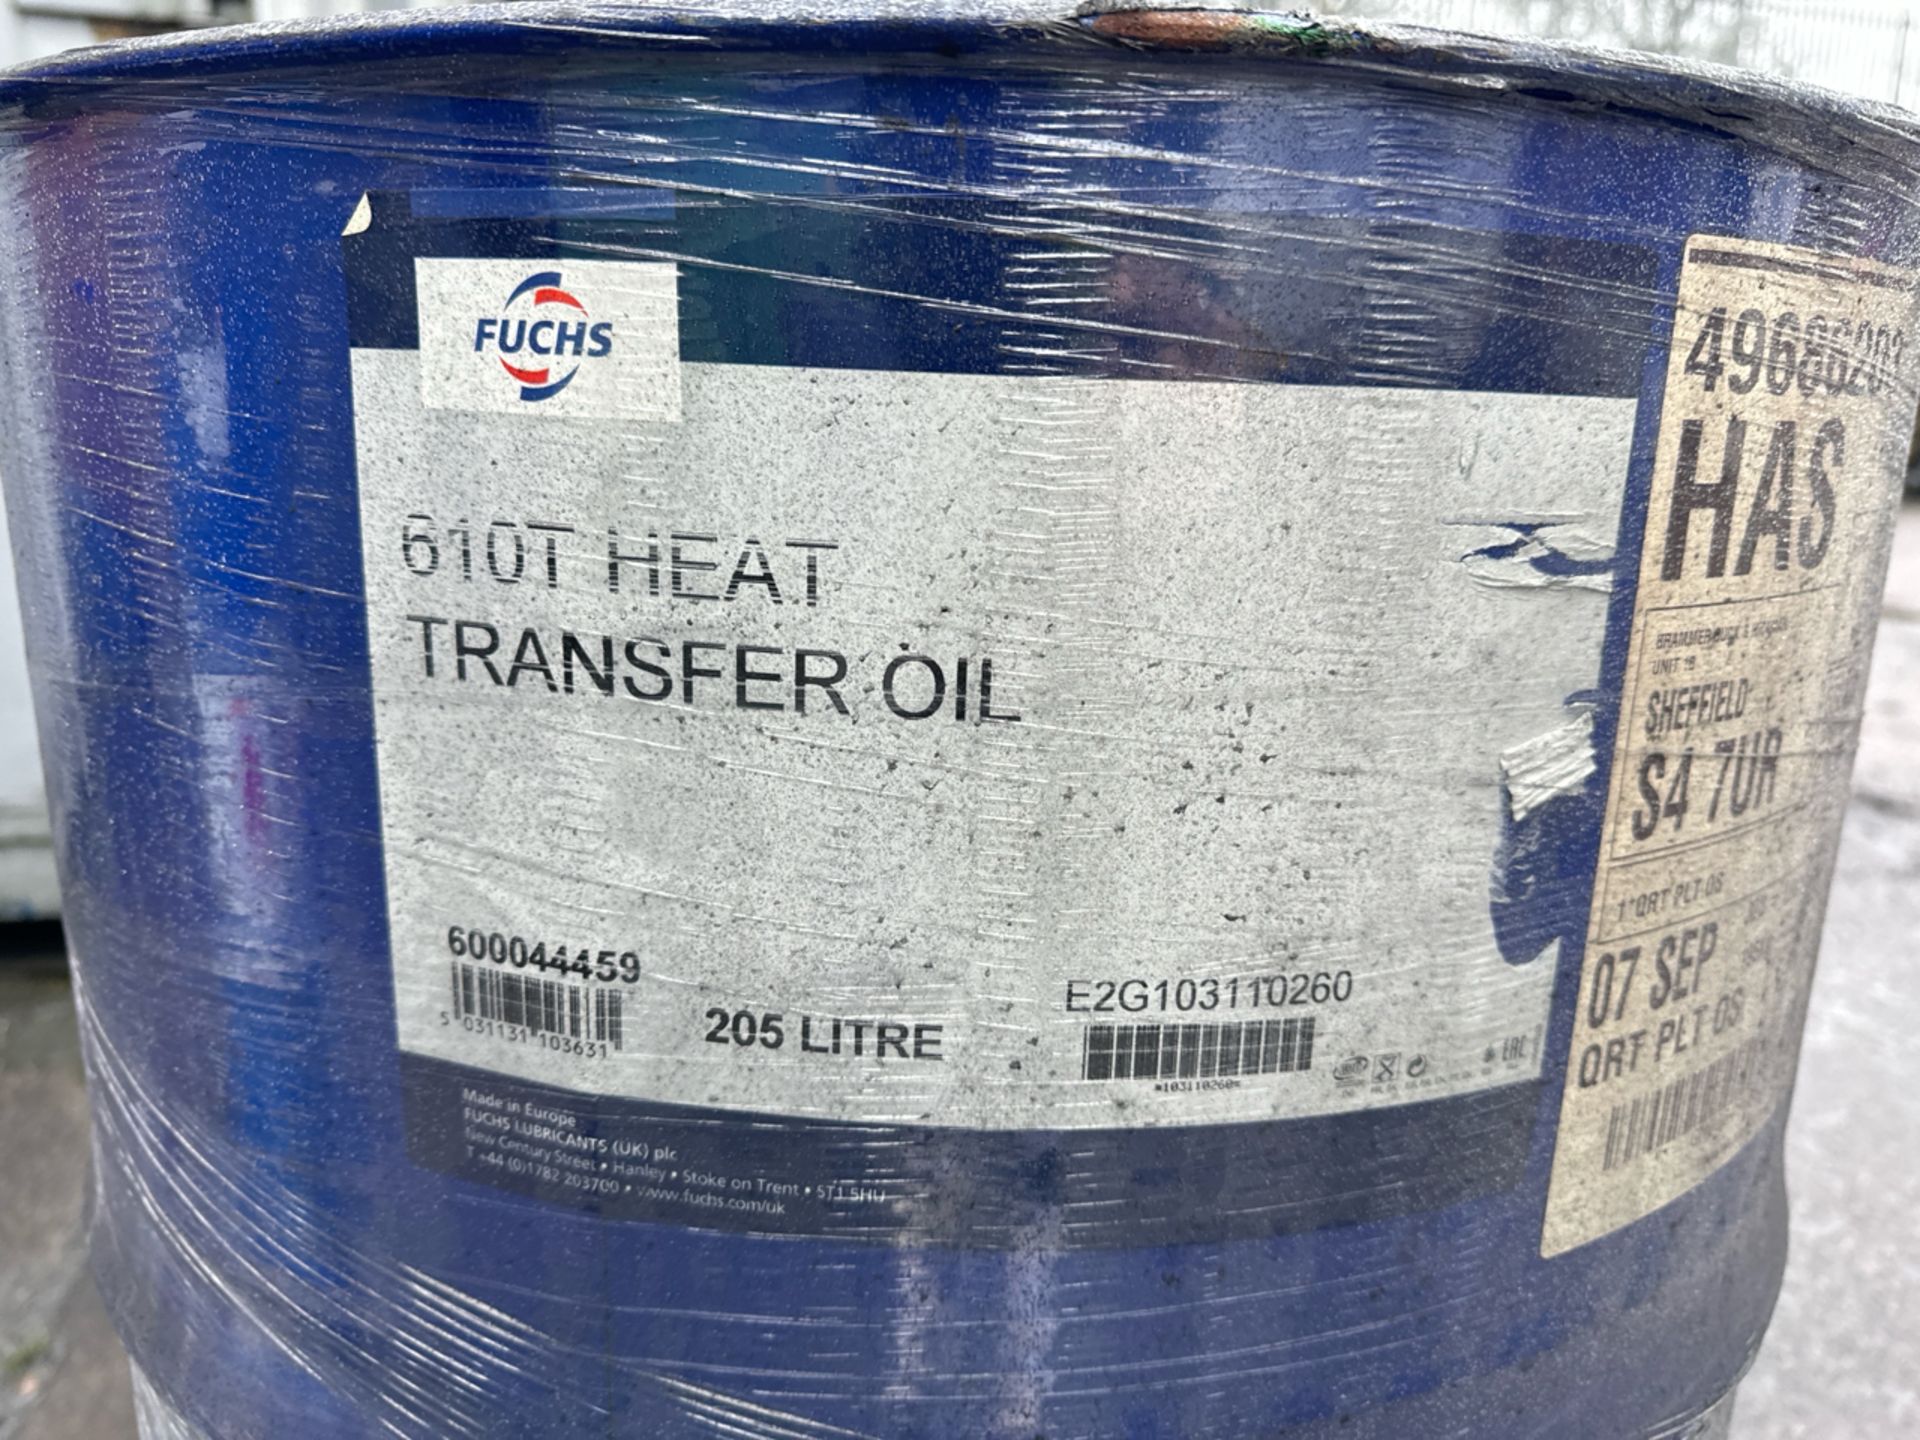 Barrel of 610T Heat Transfer Oil - Image 3 of 3